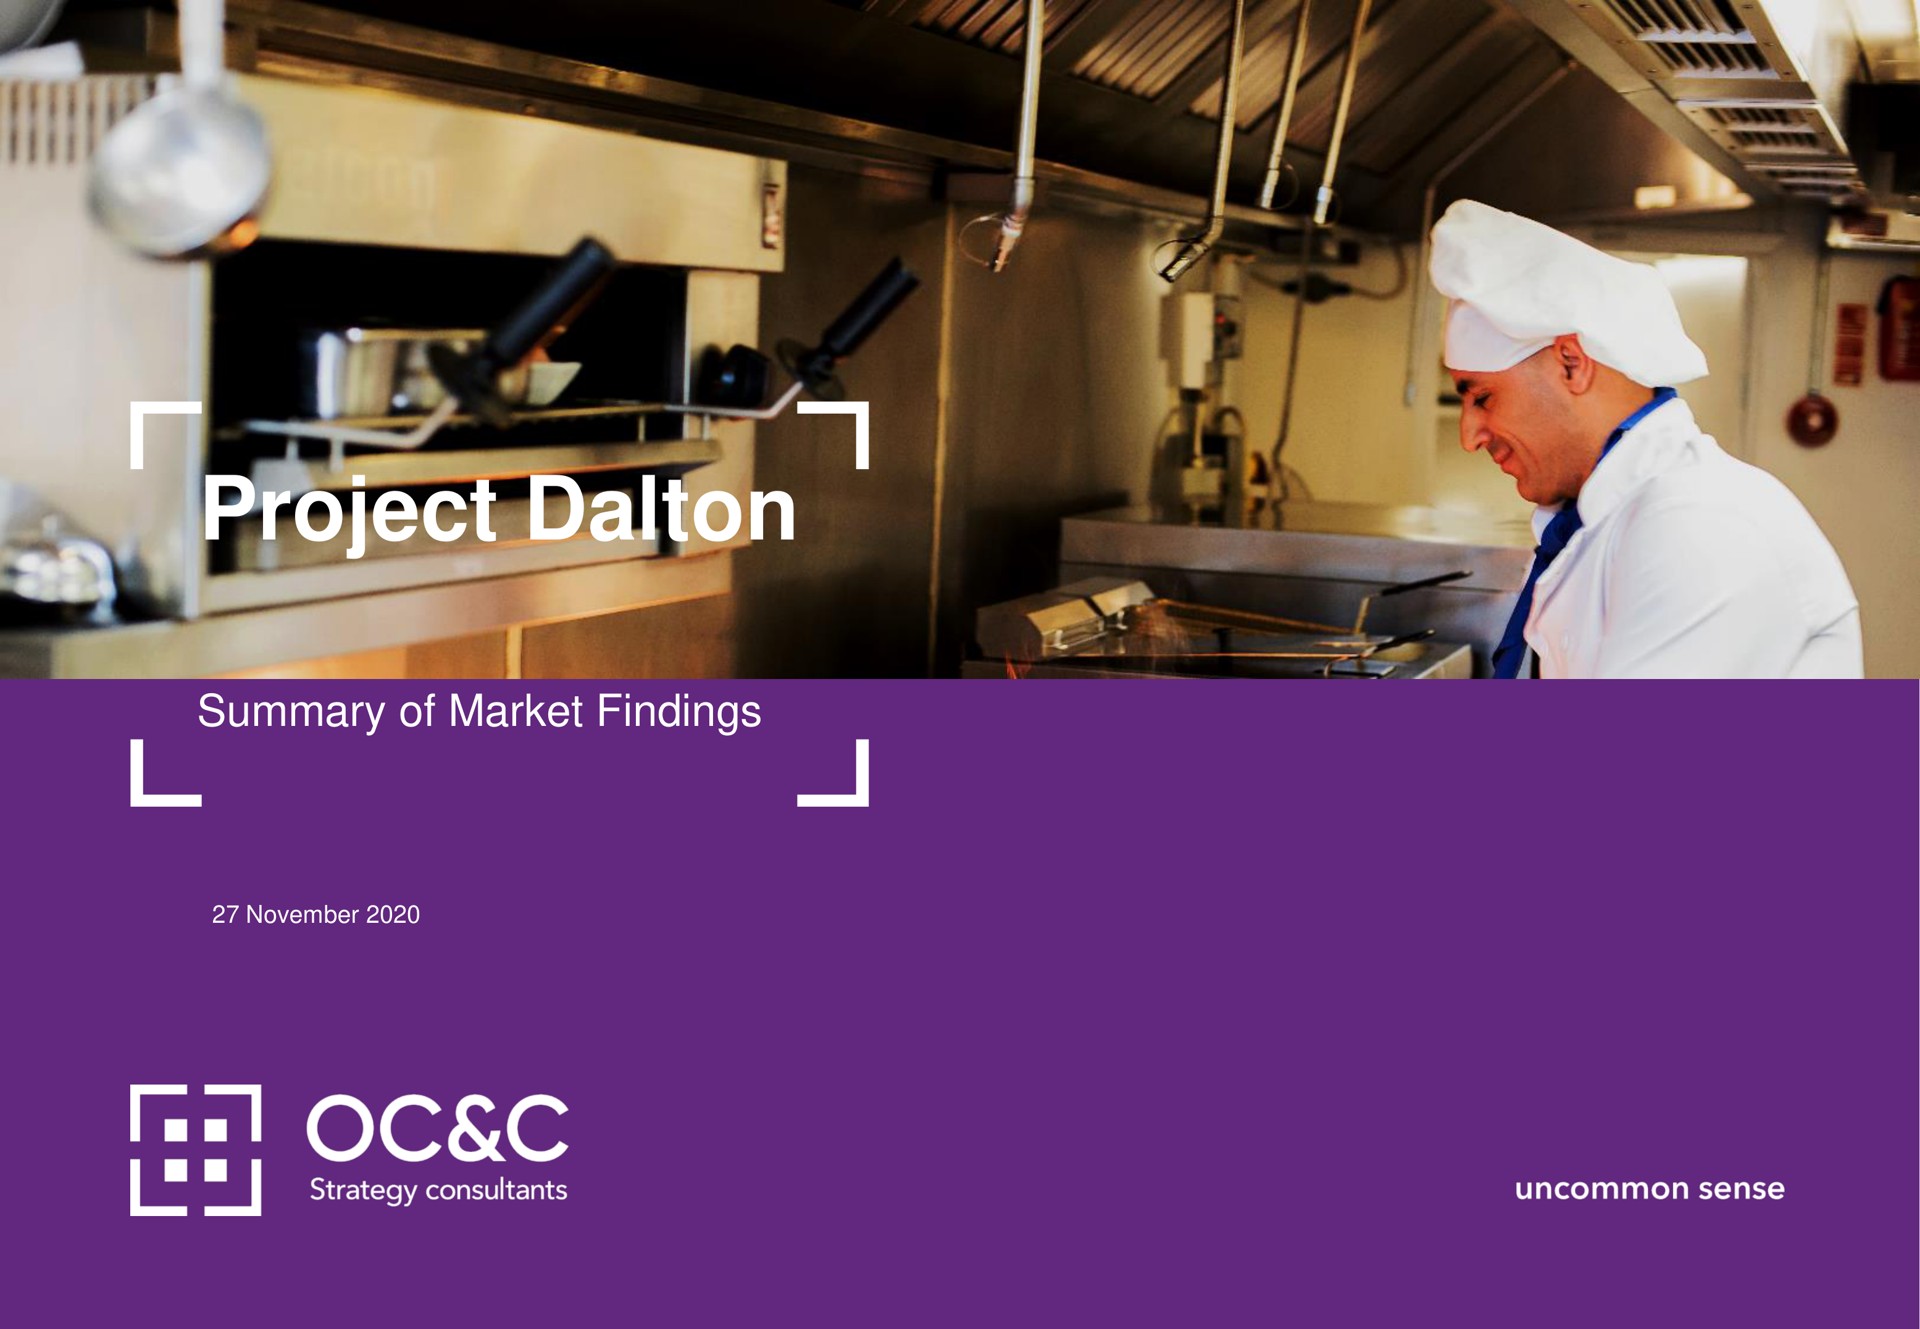 project dalton summary of market findings prim teas | Deliveroo